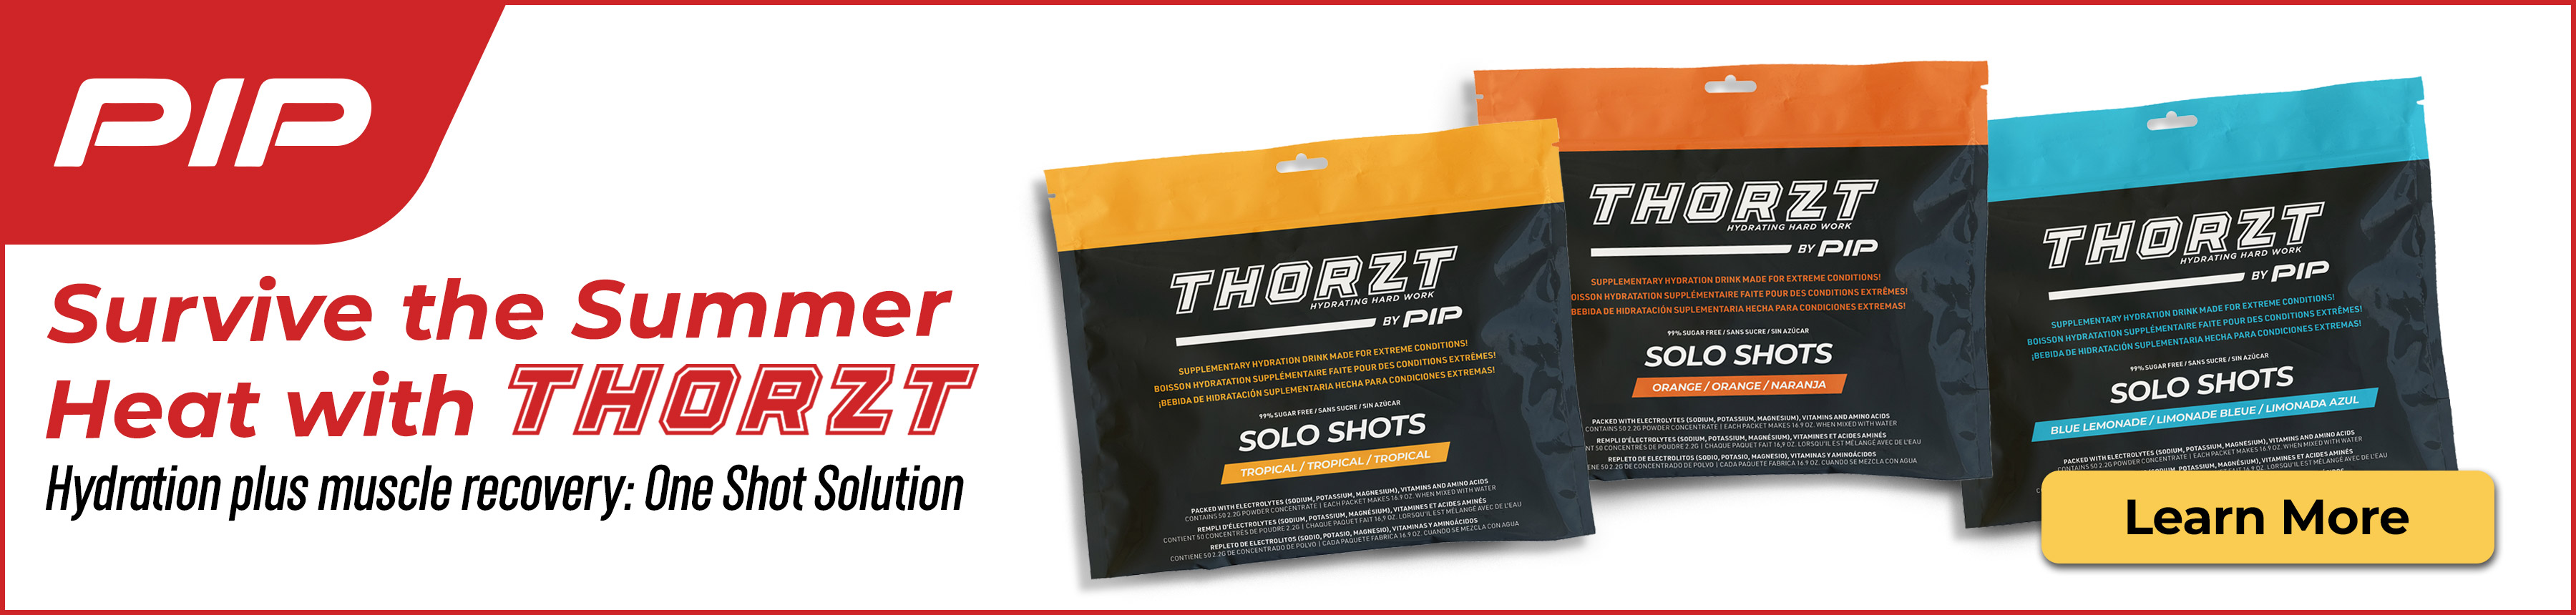 THORZT™ Solo Shots by PIP